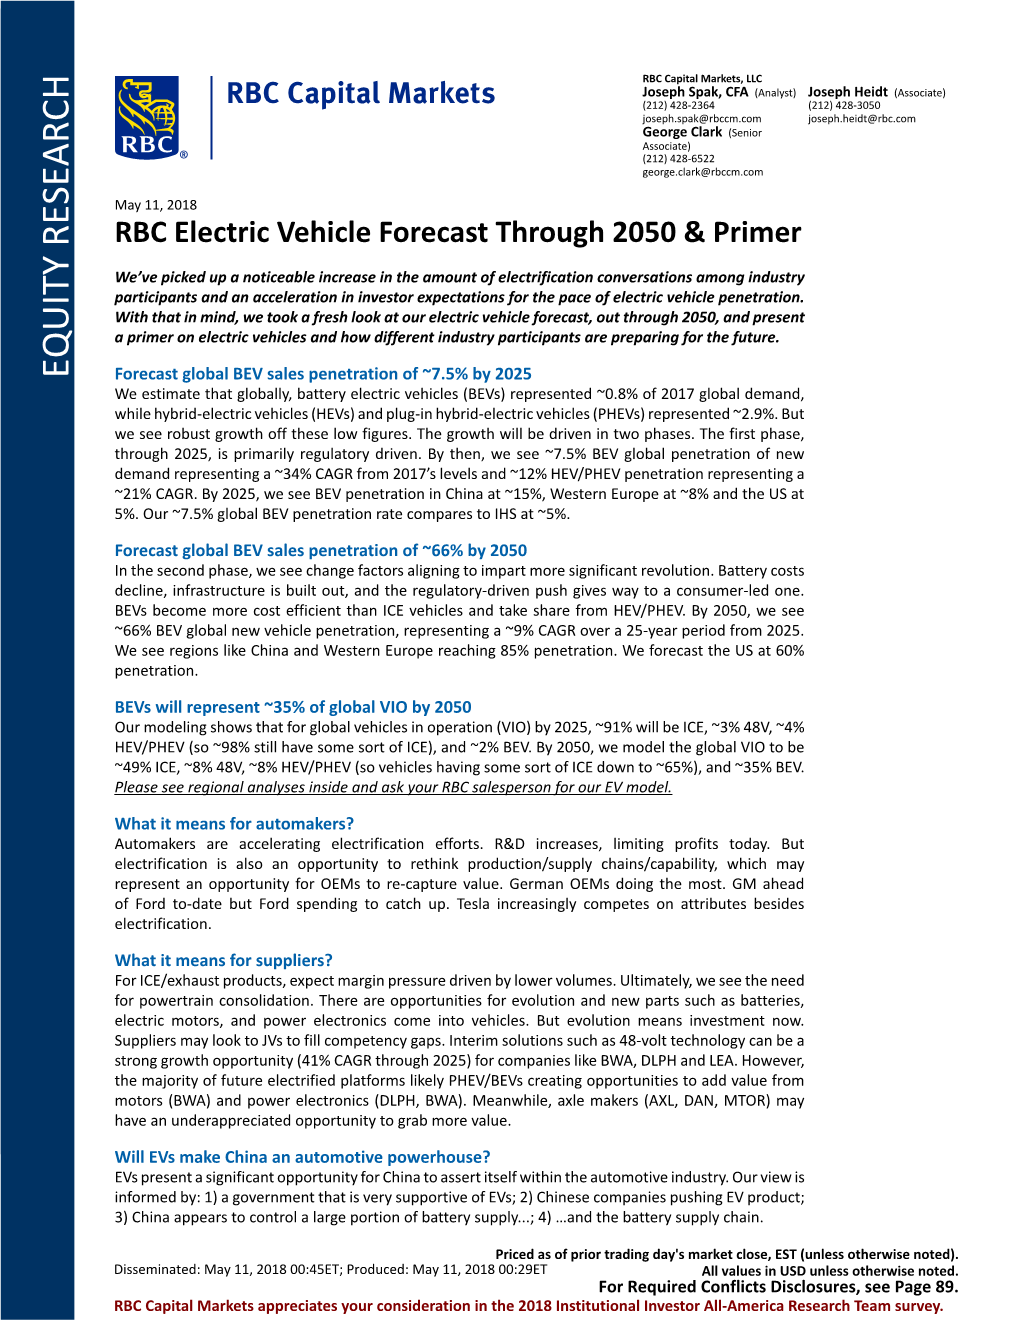 RBC Electric Vehicle Forecast Through 2050 & Primer